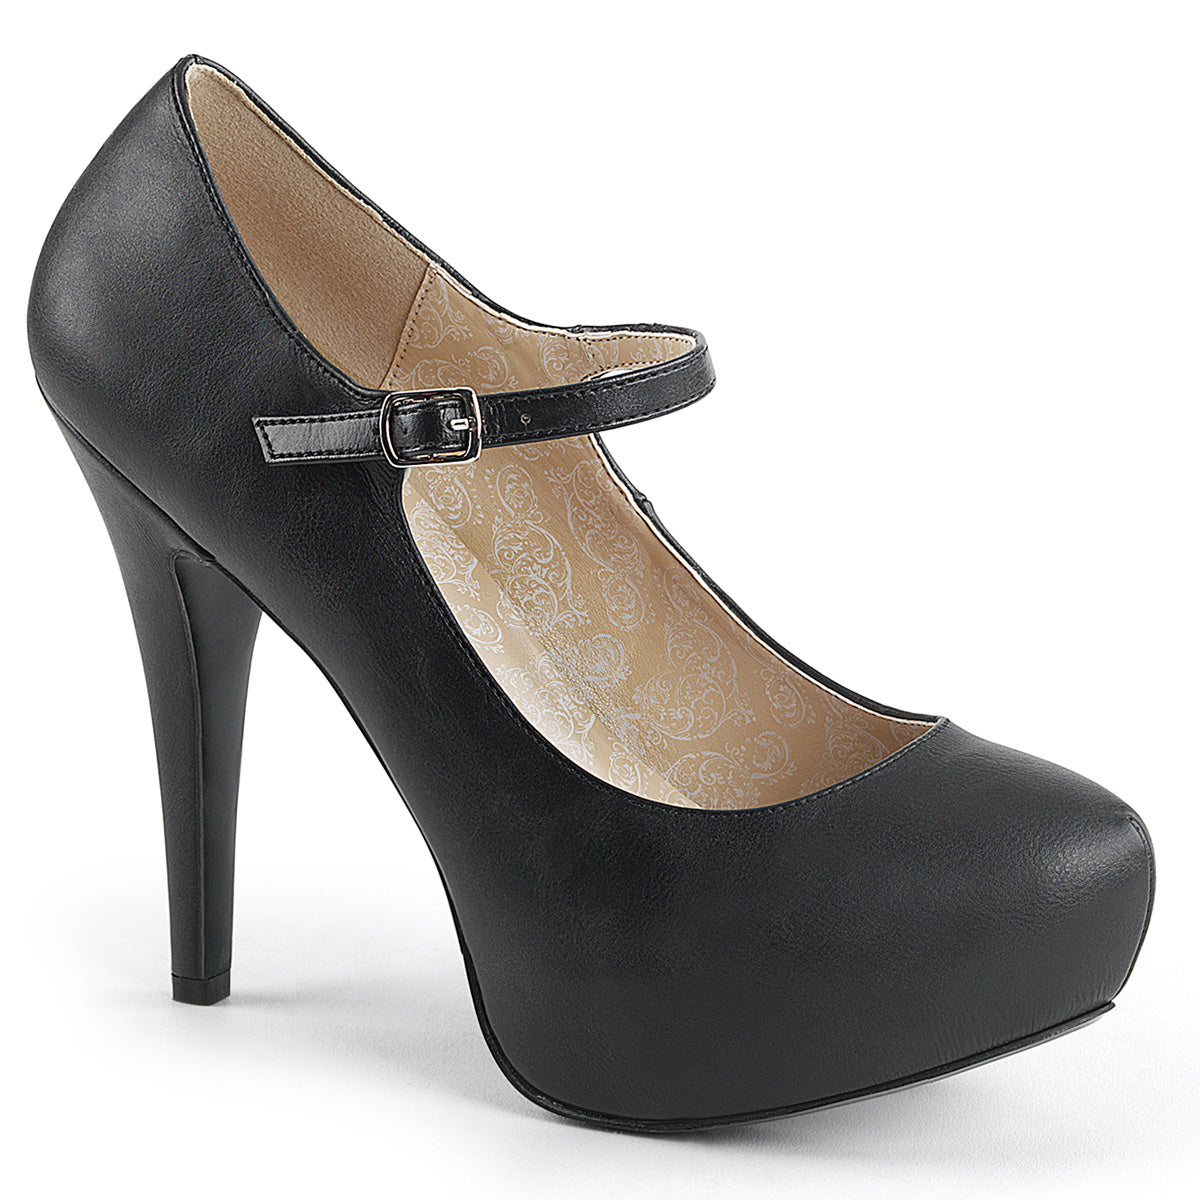 17 2 inch heels ideas | heels, 2 inch heels, women shoes